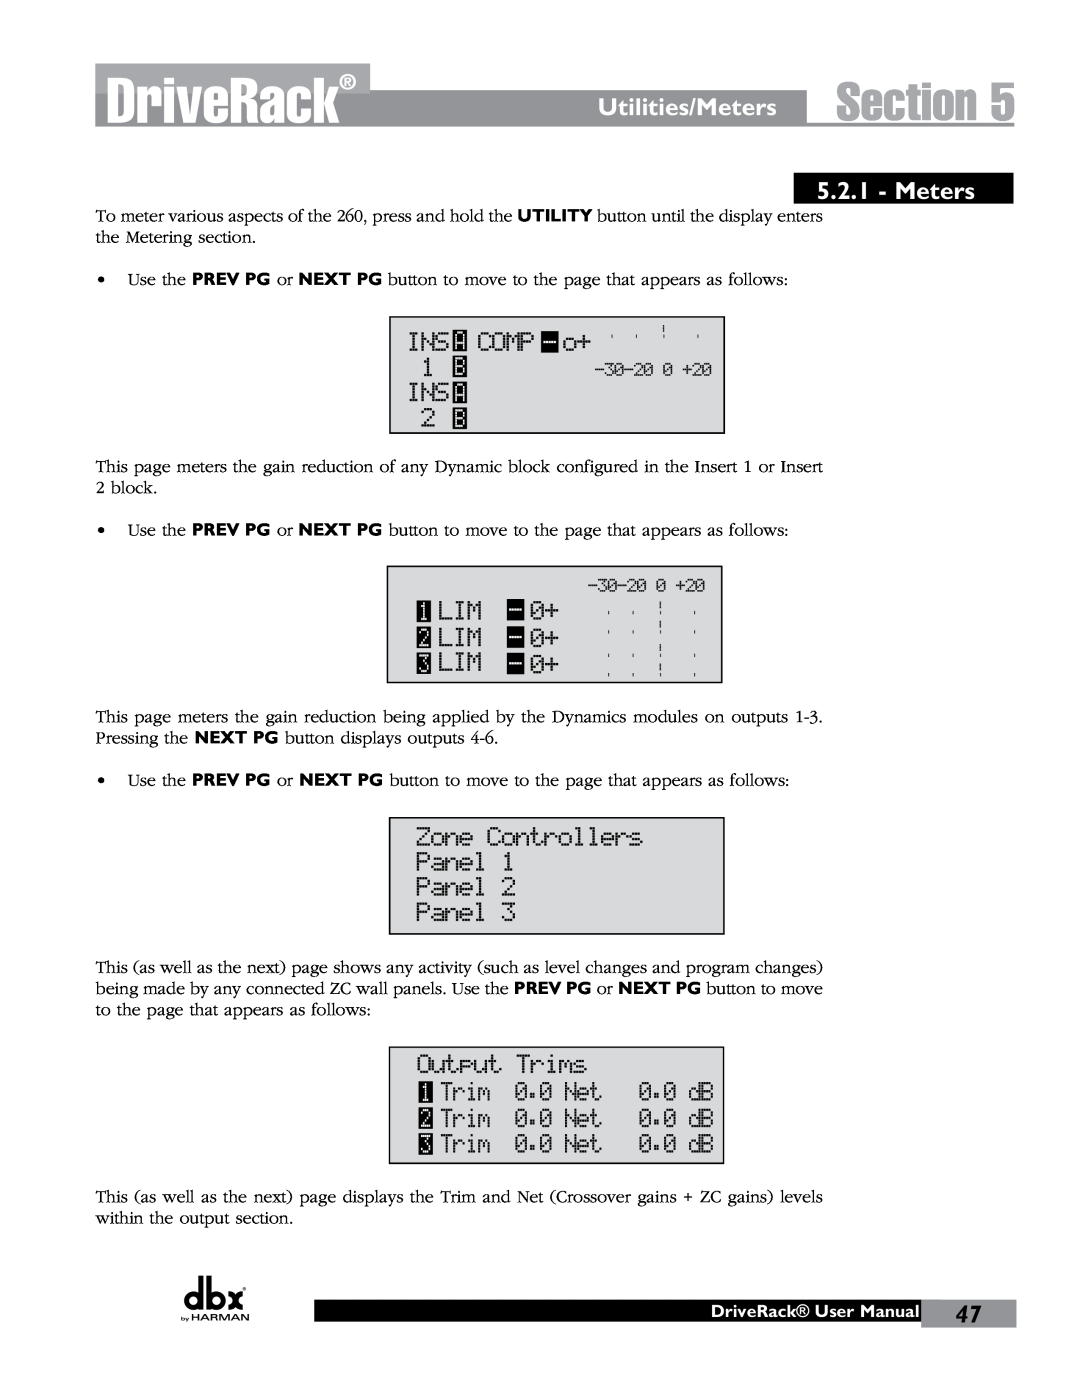 JBL 260 user manual DriveRack, Section, INS A COMP - o+ 